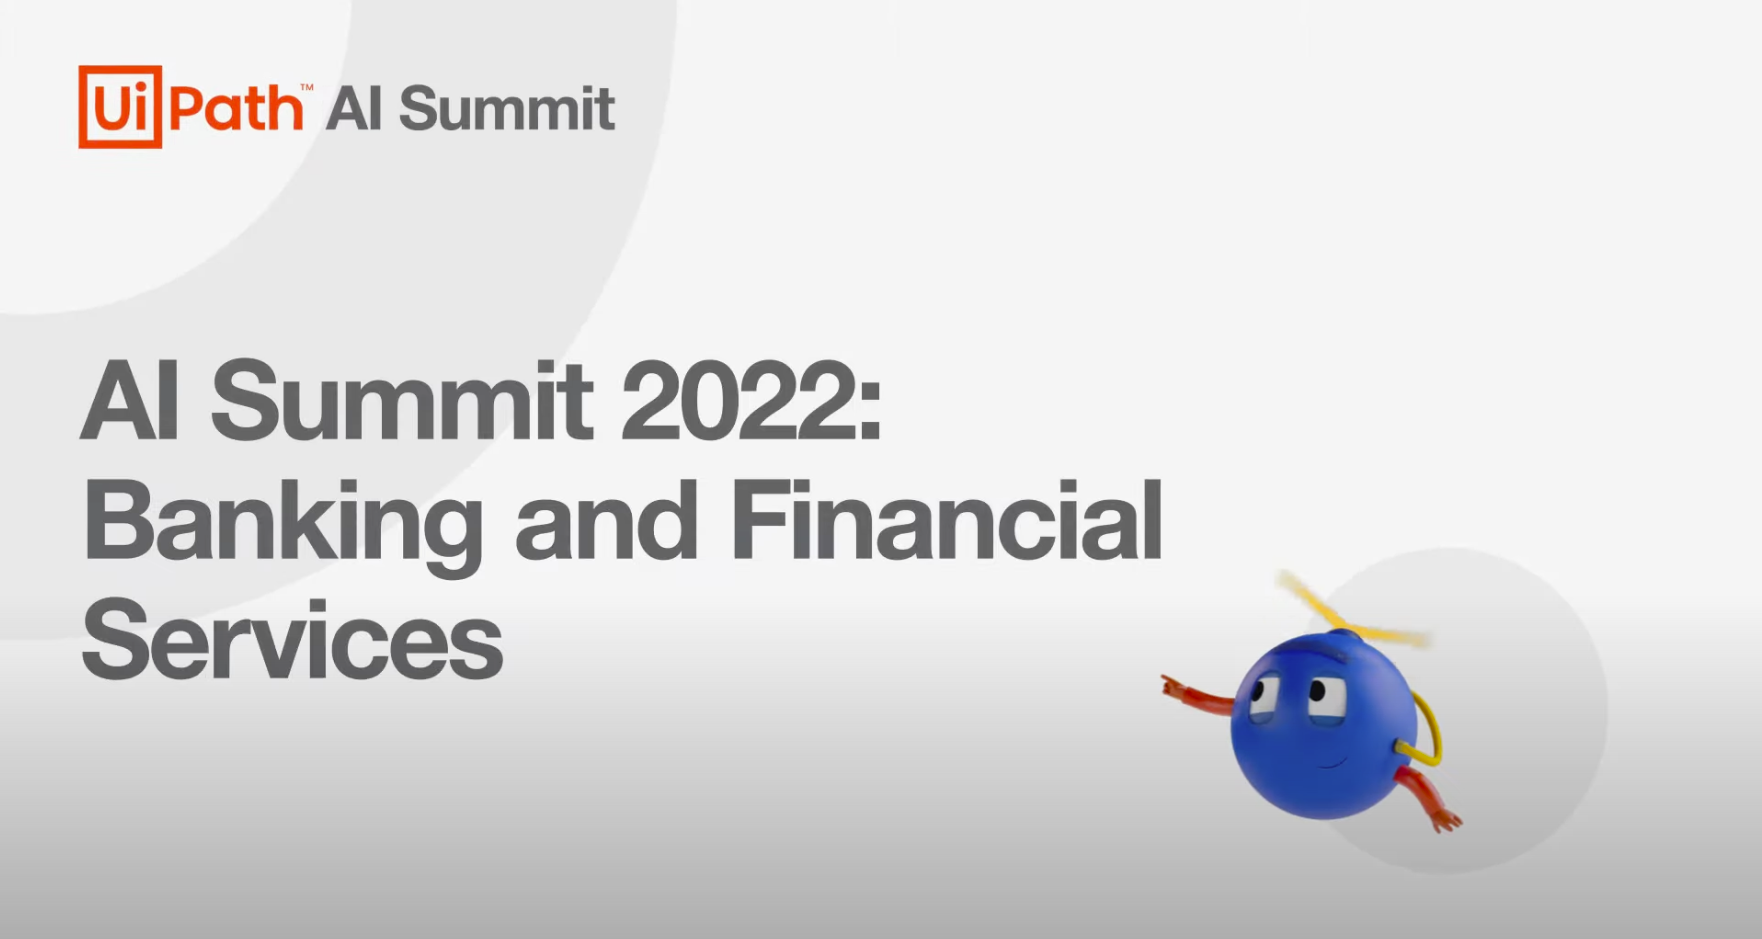 UiPath AI Summit 2022: AI in Banking & Financial Services